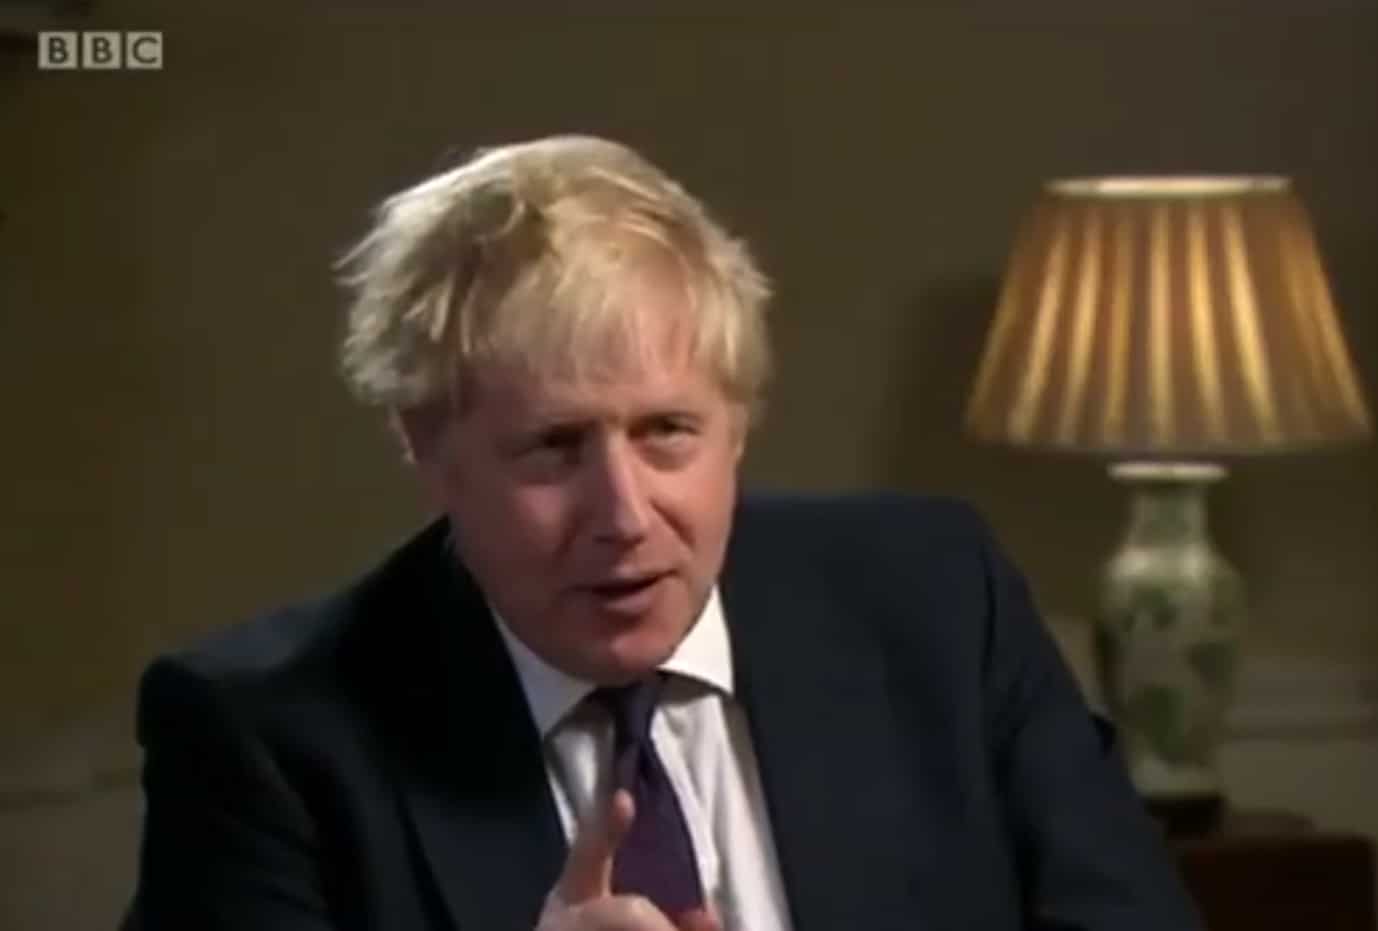 Boris ambushed by Union Jack cake – reports